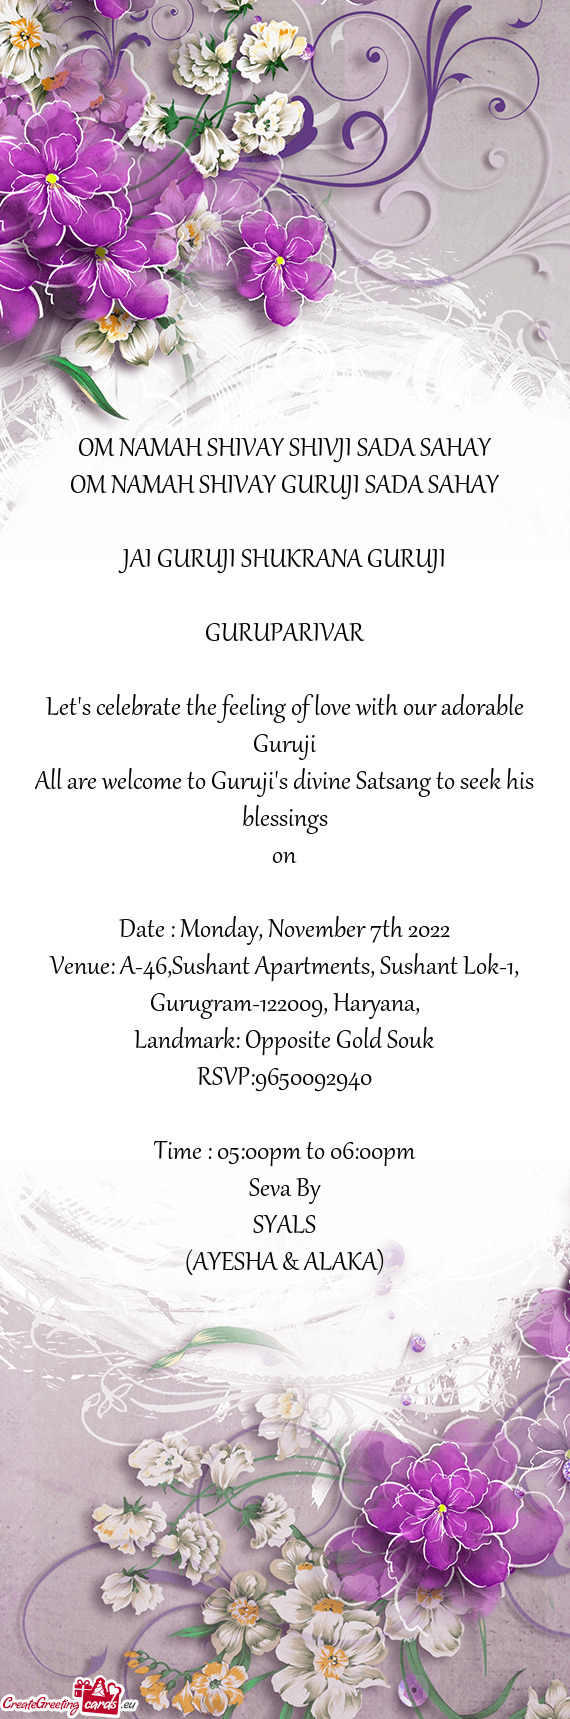 All are welcome to Guruji's divine Satsang to seek his